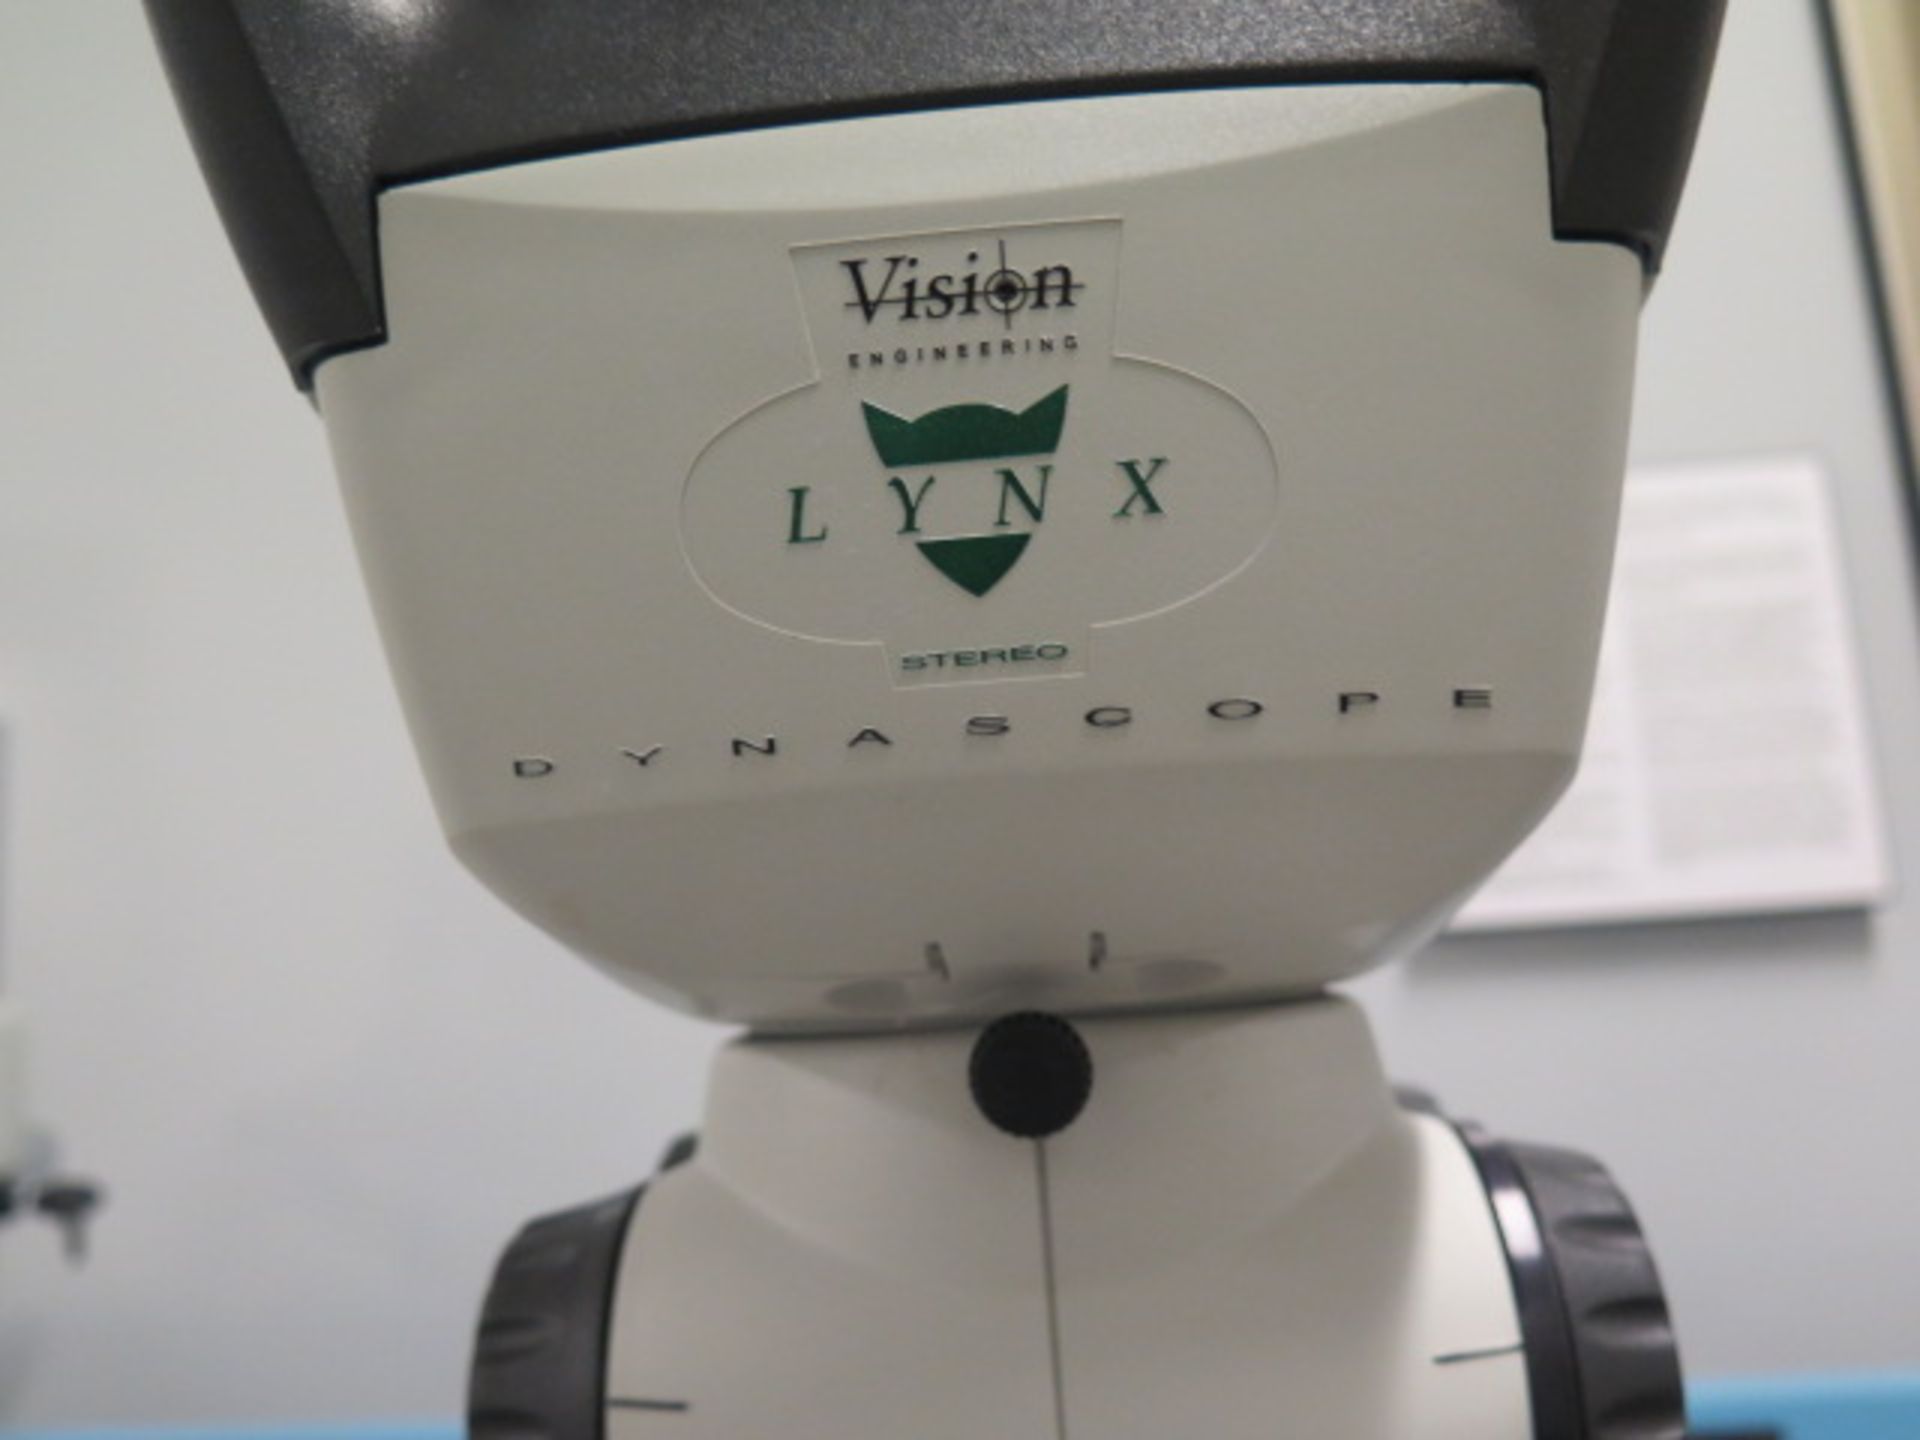 Vision Engineering LYNX Stereo Dynascope w/ Vision 150 Watt Fiber Optic Illuminator and Stand | - Image 6 of 6